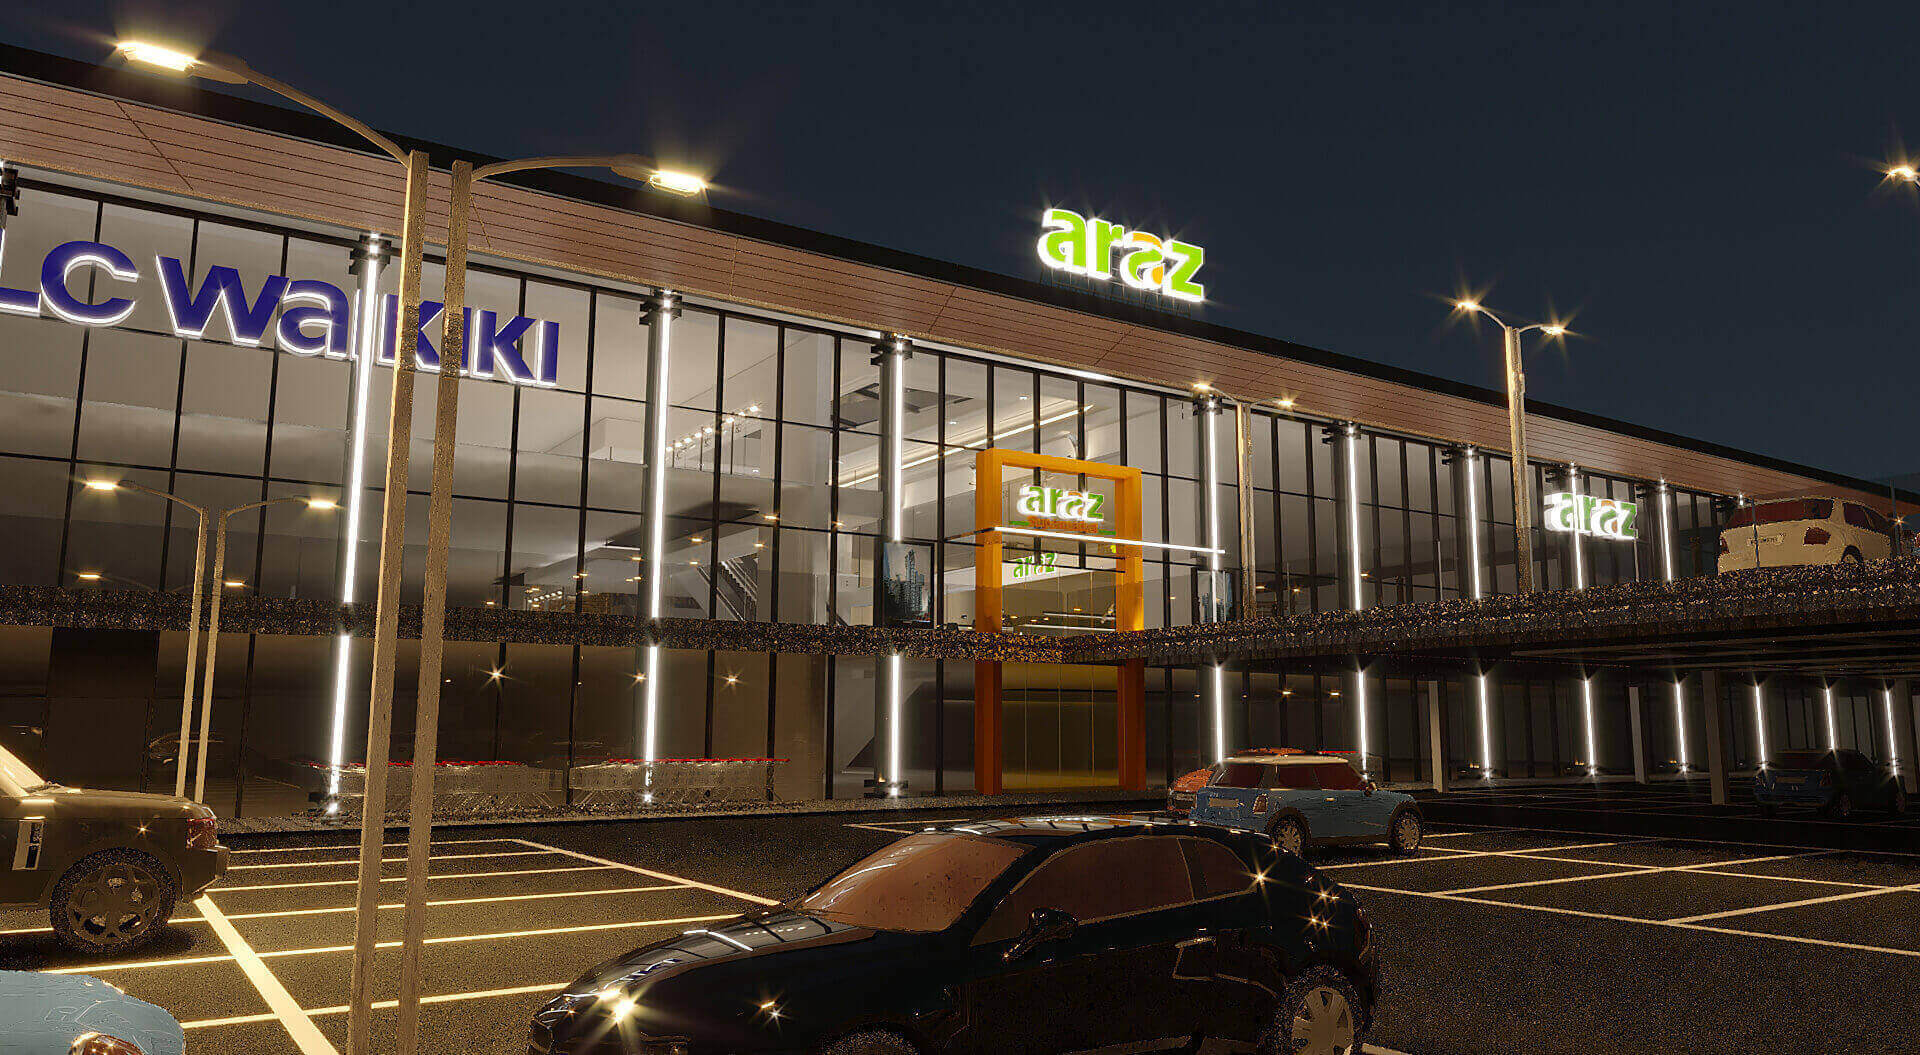 Araz Shopping Centre Azerbaijan, Designing a Local Mall, Night View External Elevation and Parking - CampbellRigg Agency